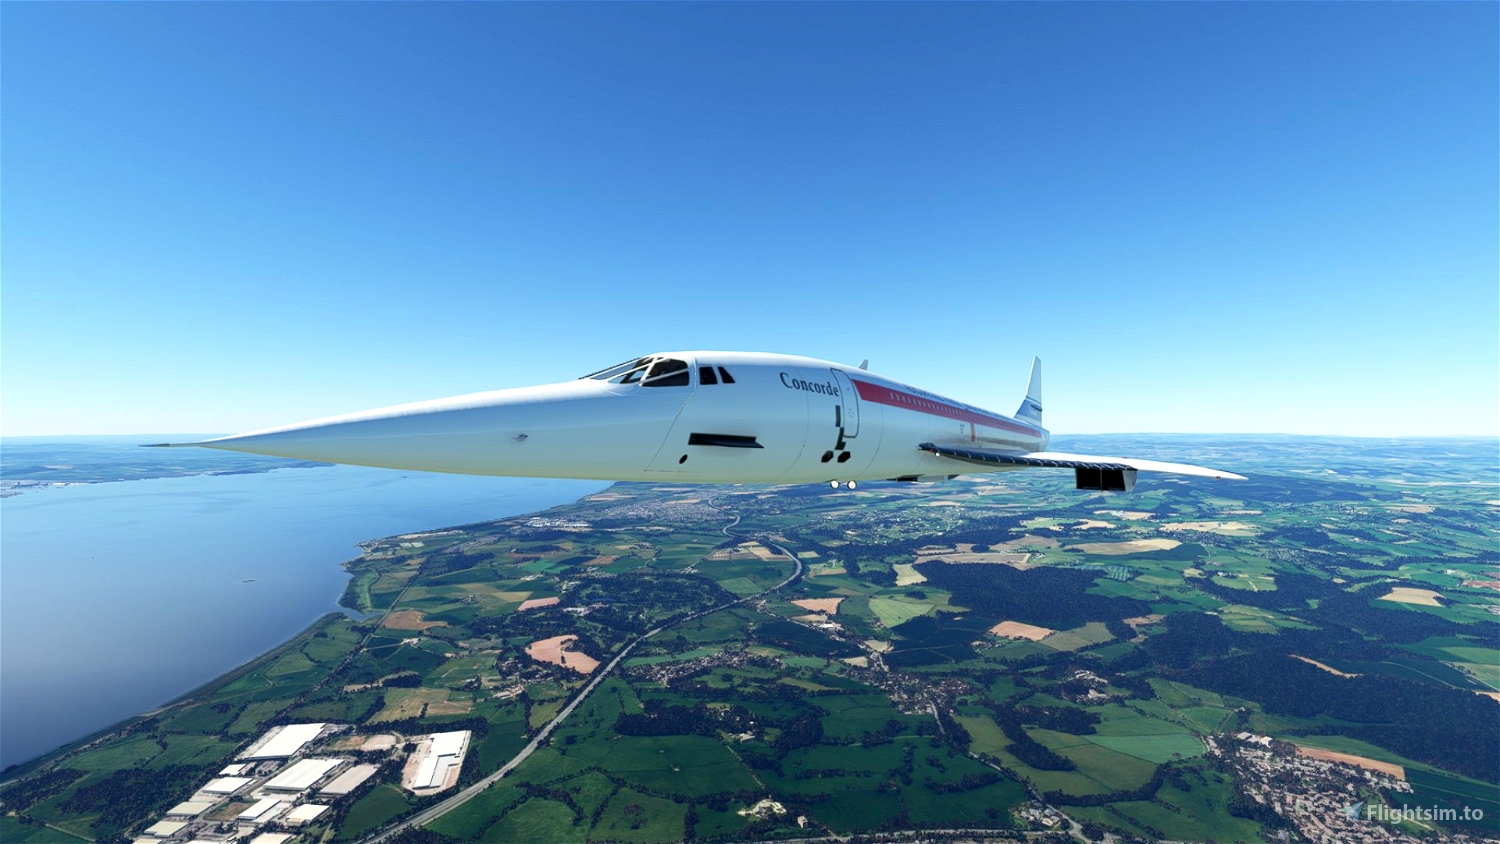 Dc Designs Concorde Preproduction 001 G Axdn K2qwz ?auto Optimize=medium&width=1500